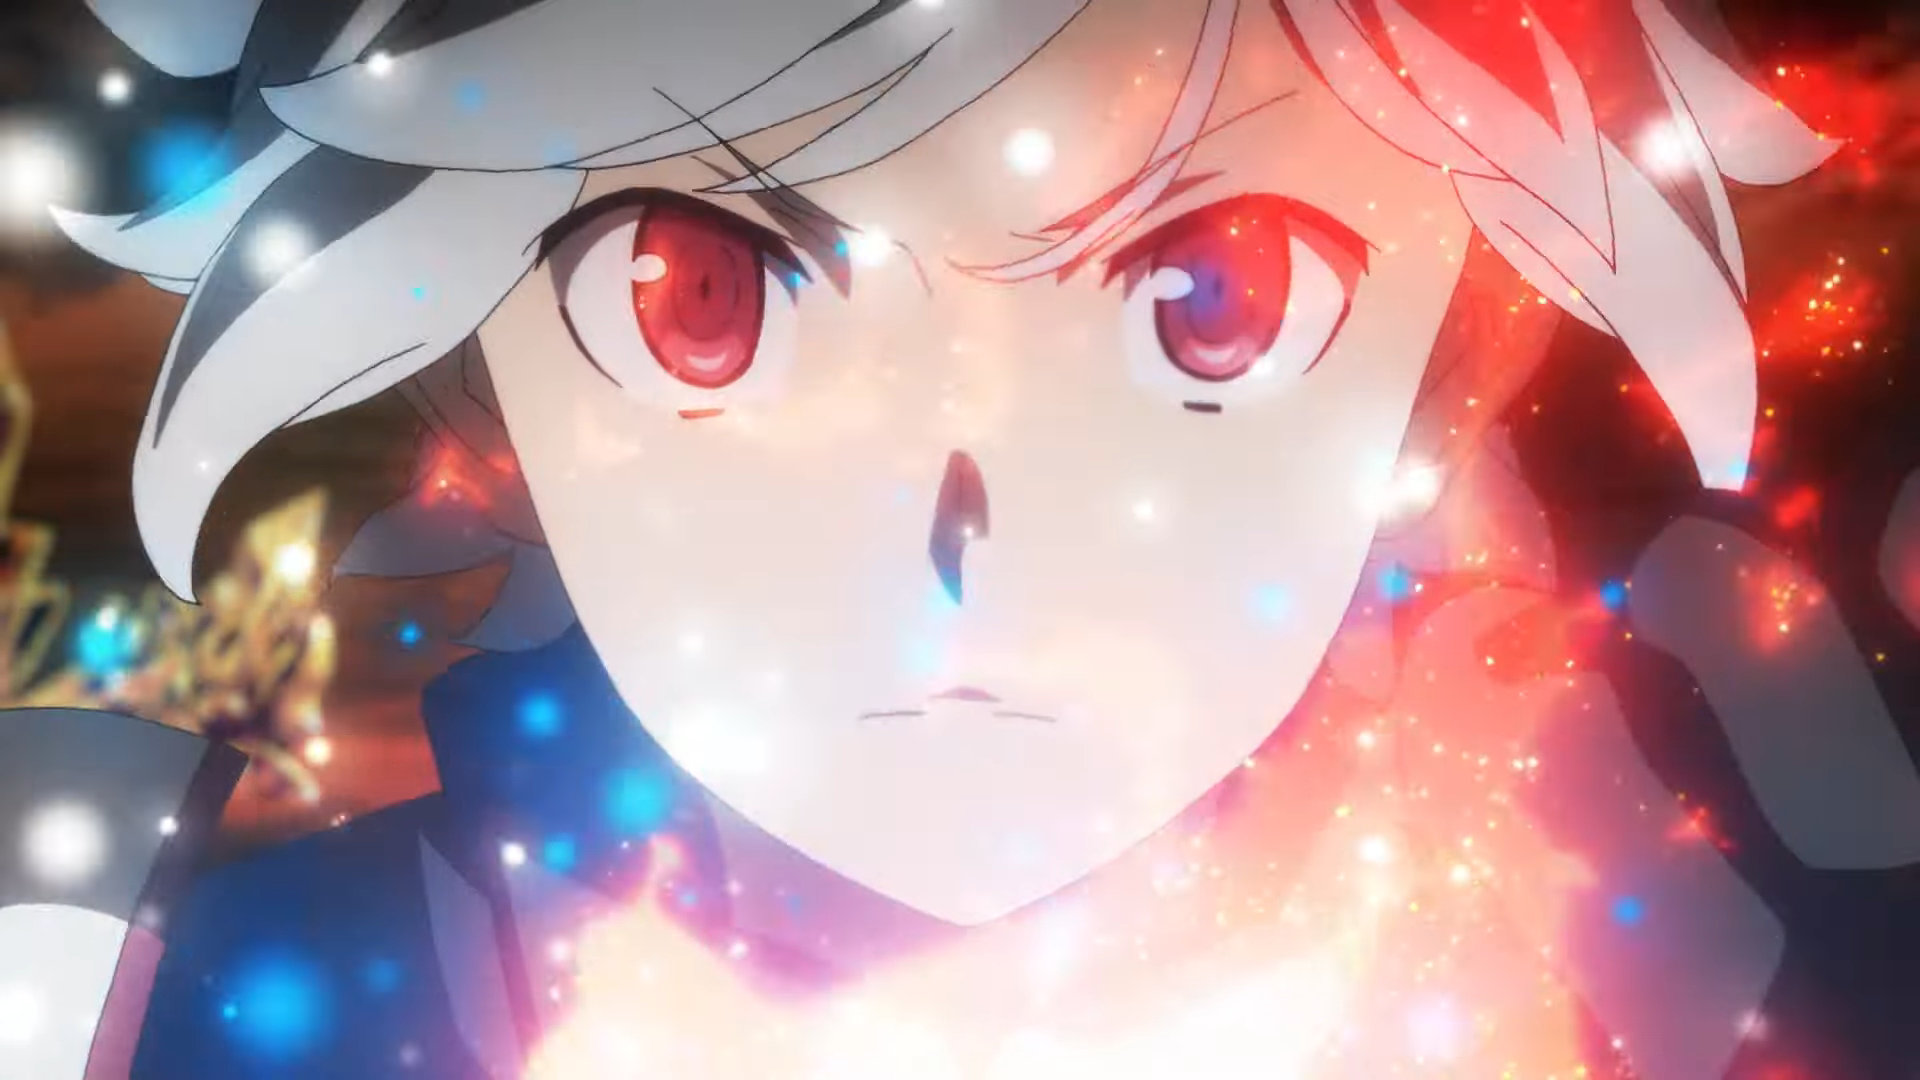 DanMachi Releases Season 3 Trailer!, Anime News